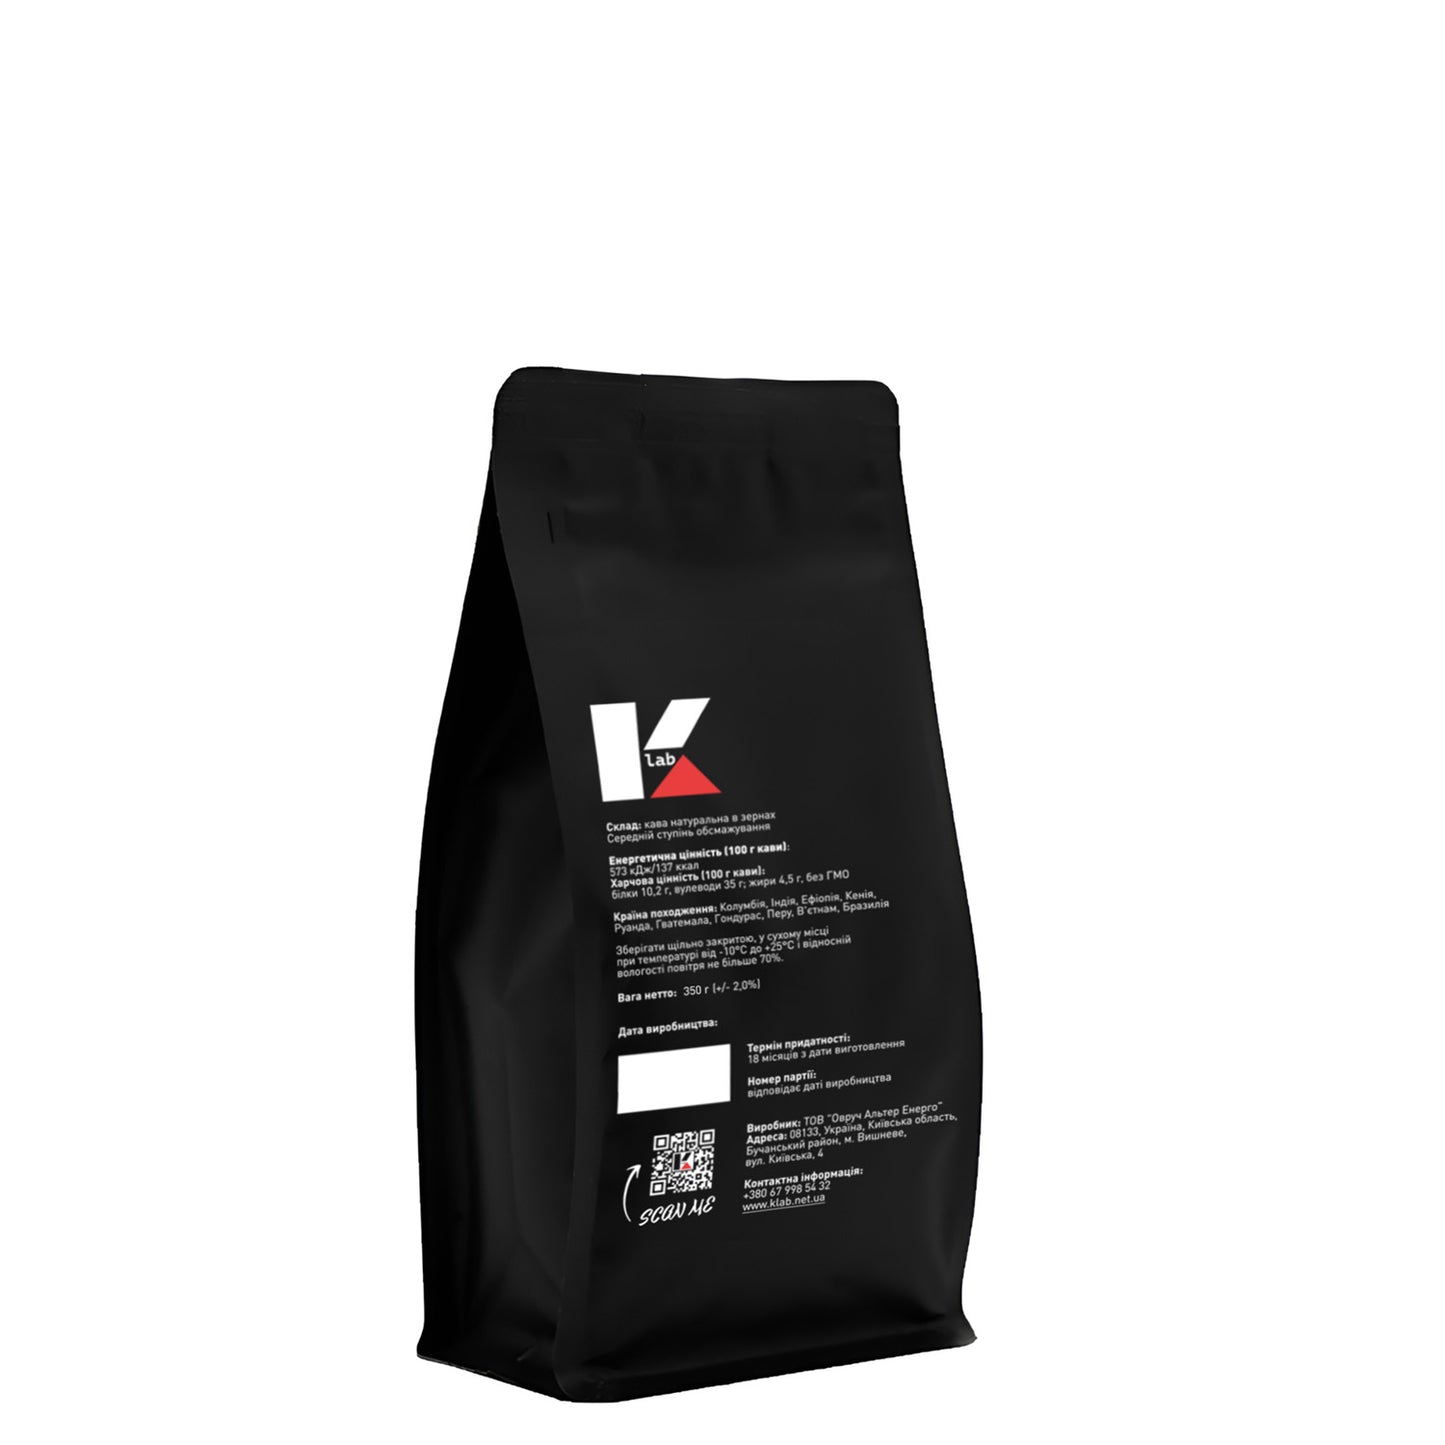 COFFEE STORY №1 - Klab (0.35kg back)